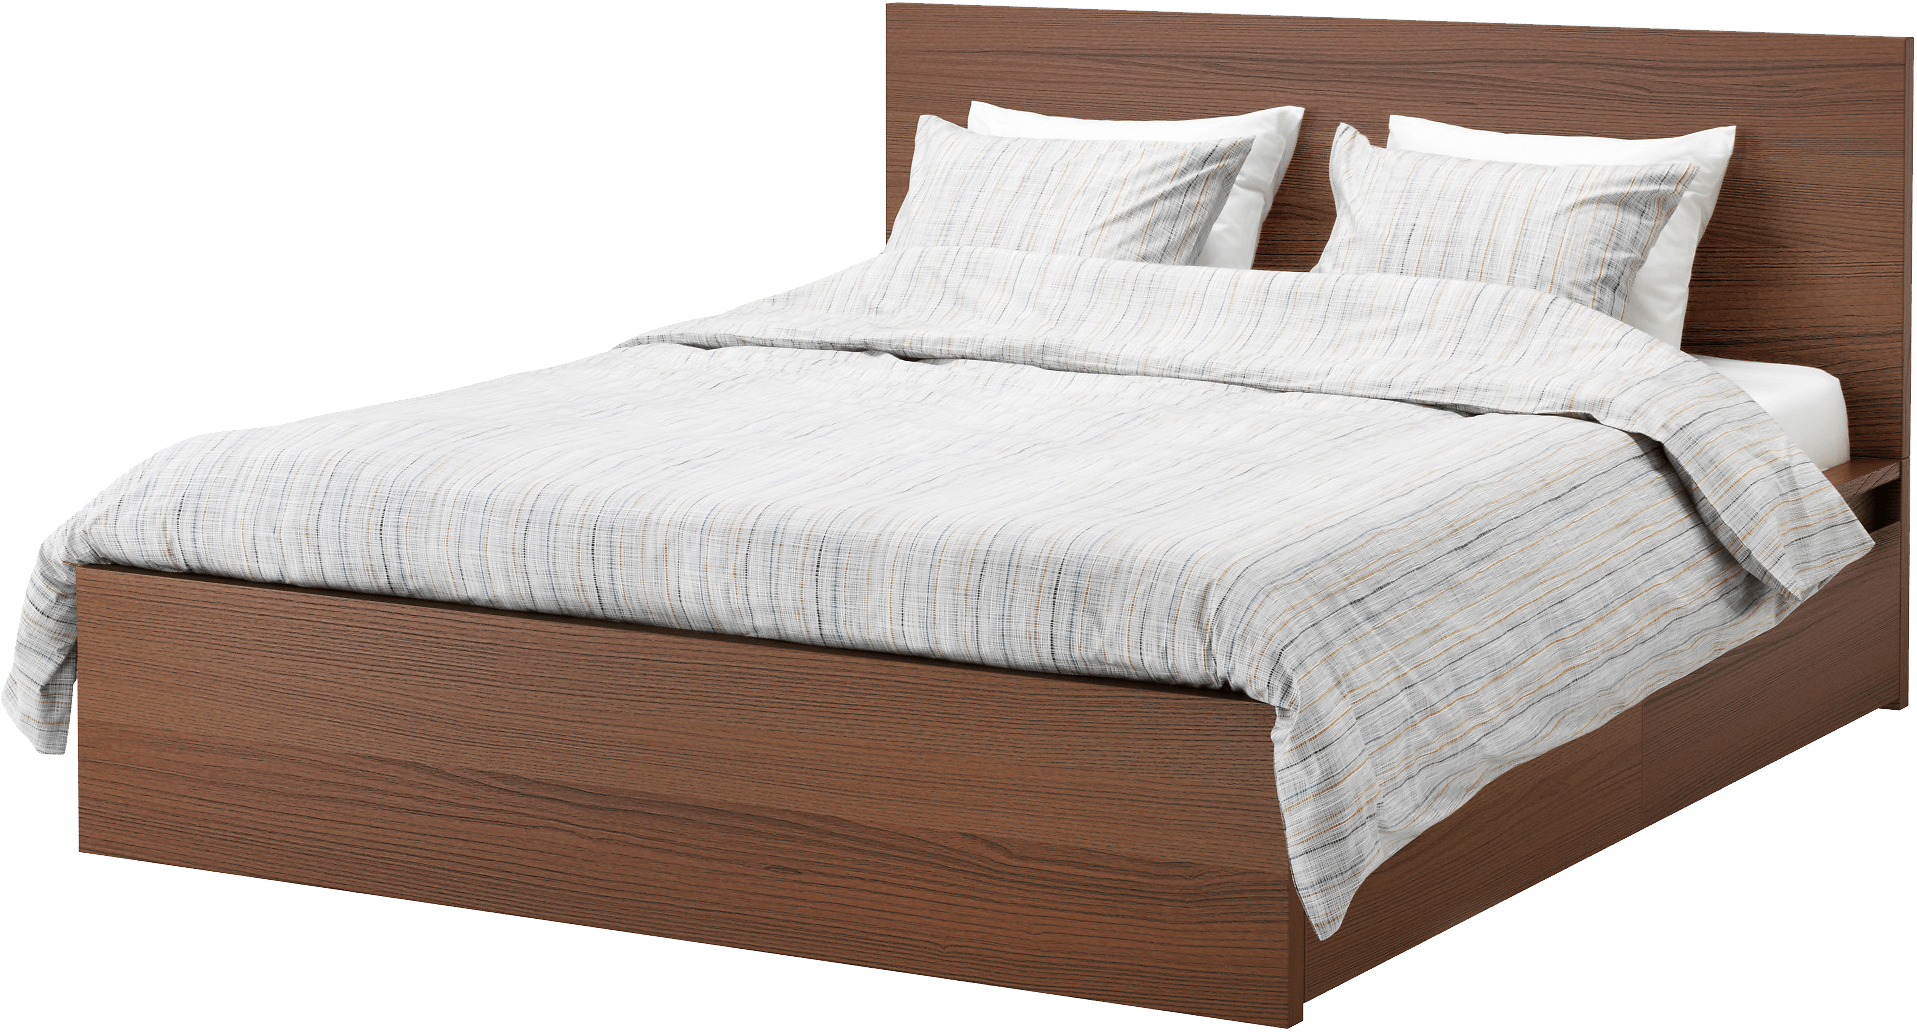 Modern Wooden Bed PNG Image